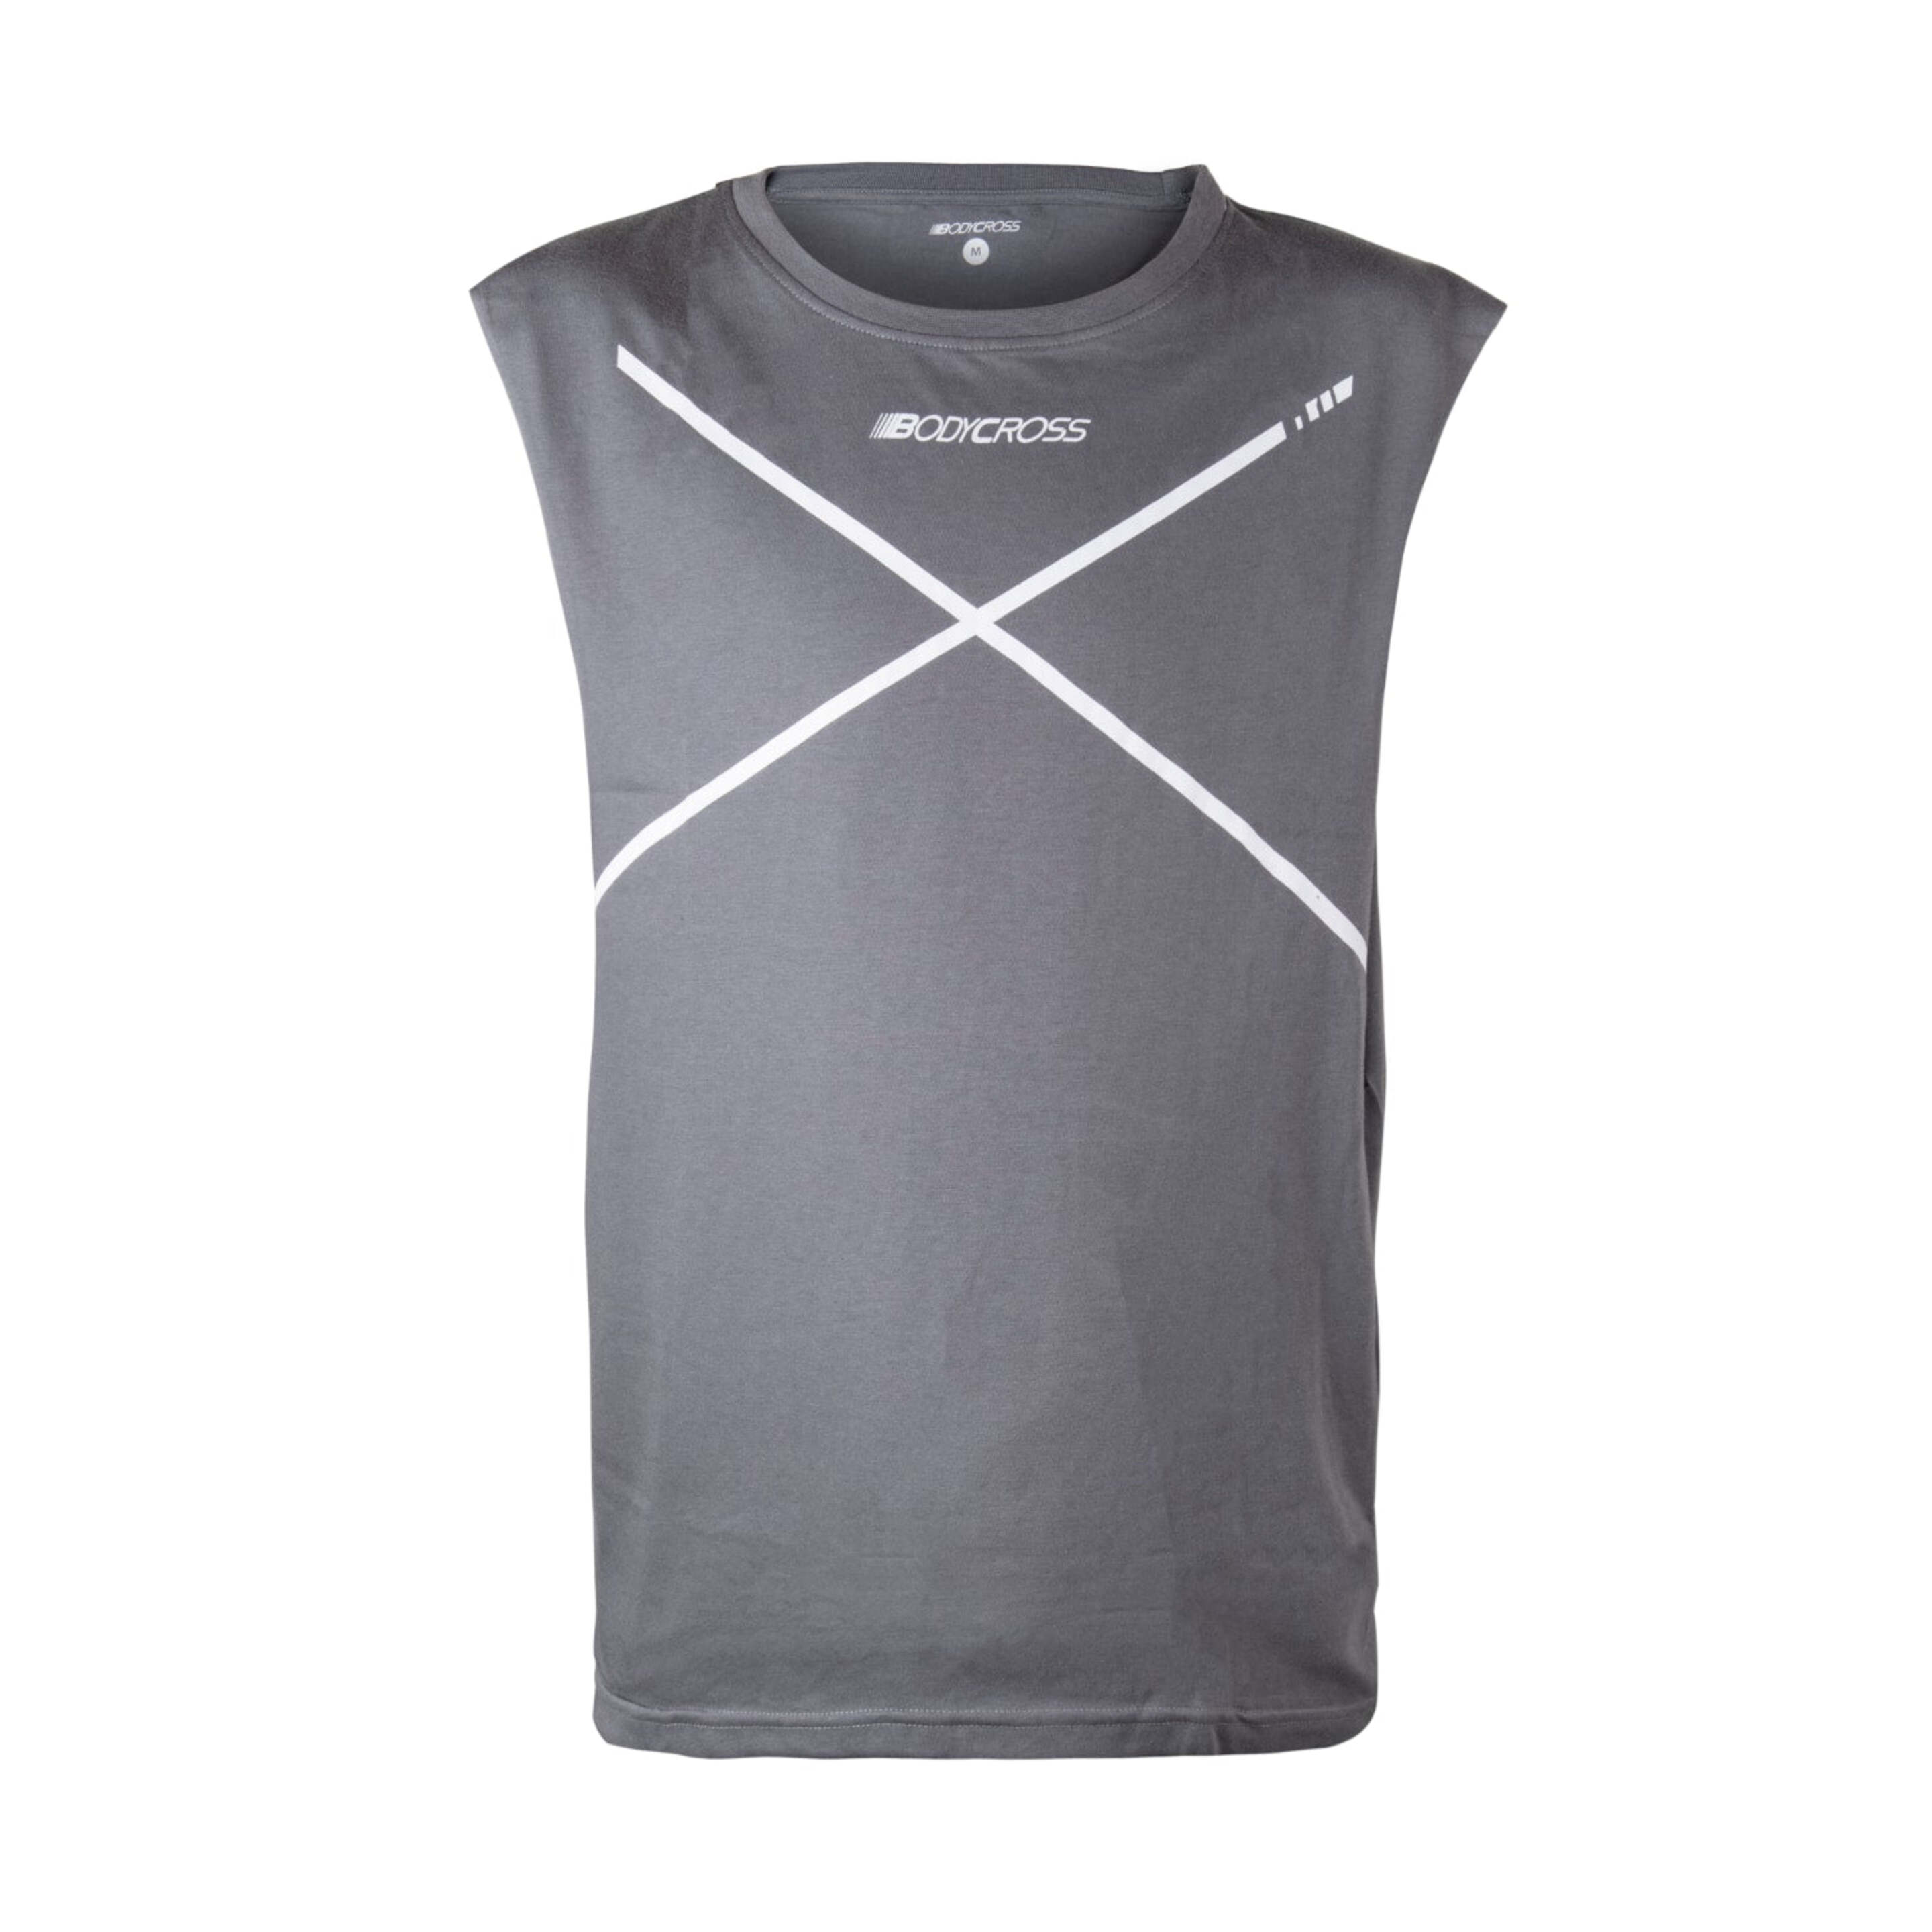 Camiseta Deportiva Bodycross Bryton - gris - 